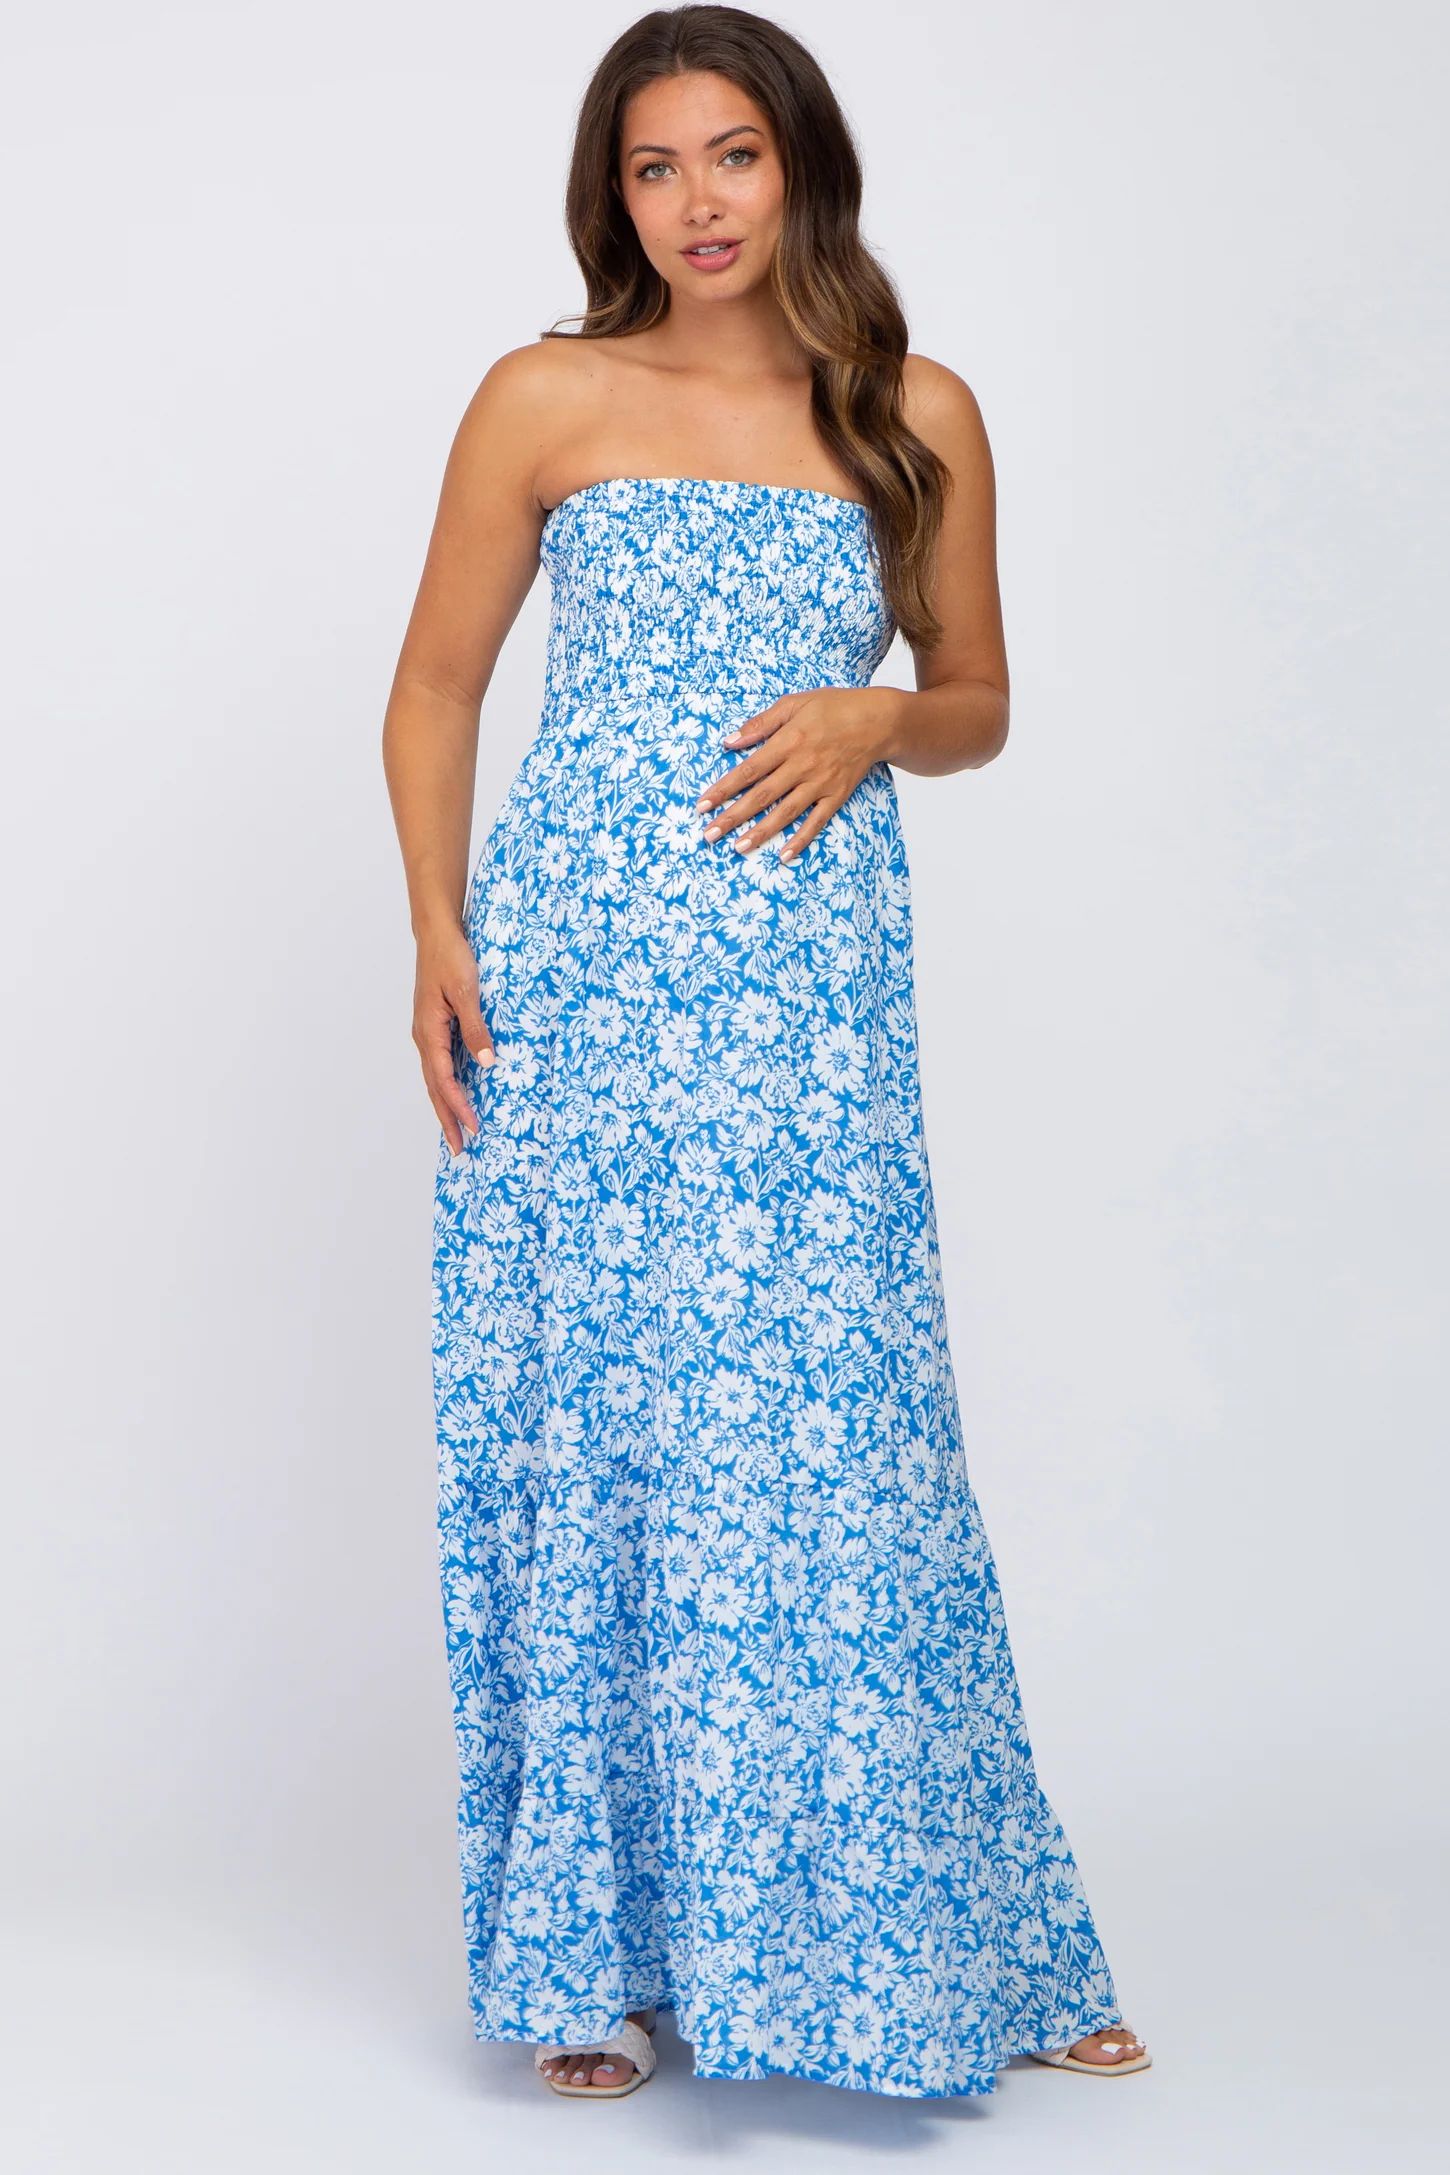 Blue Floral Strapless Smocked Maternity Maxi Dress | PinkBlush Maternity